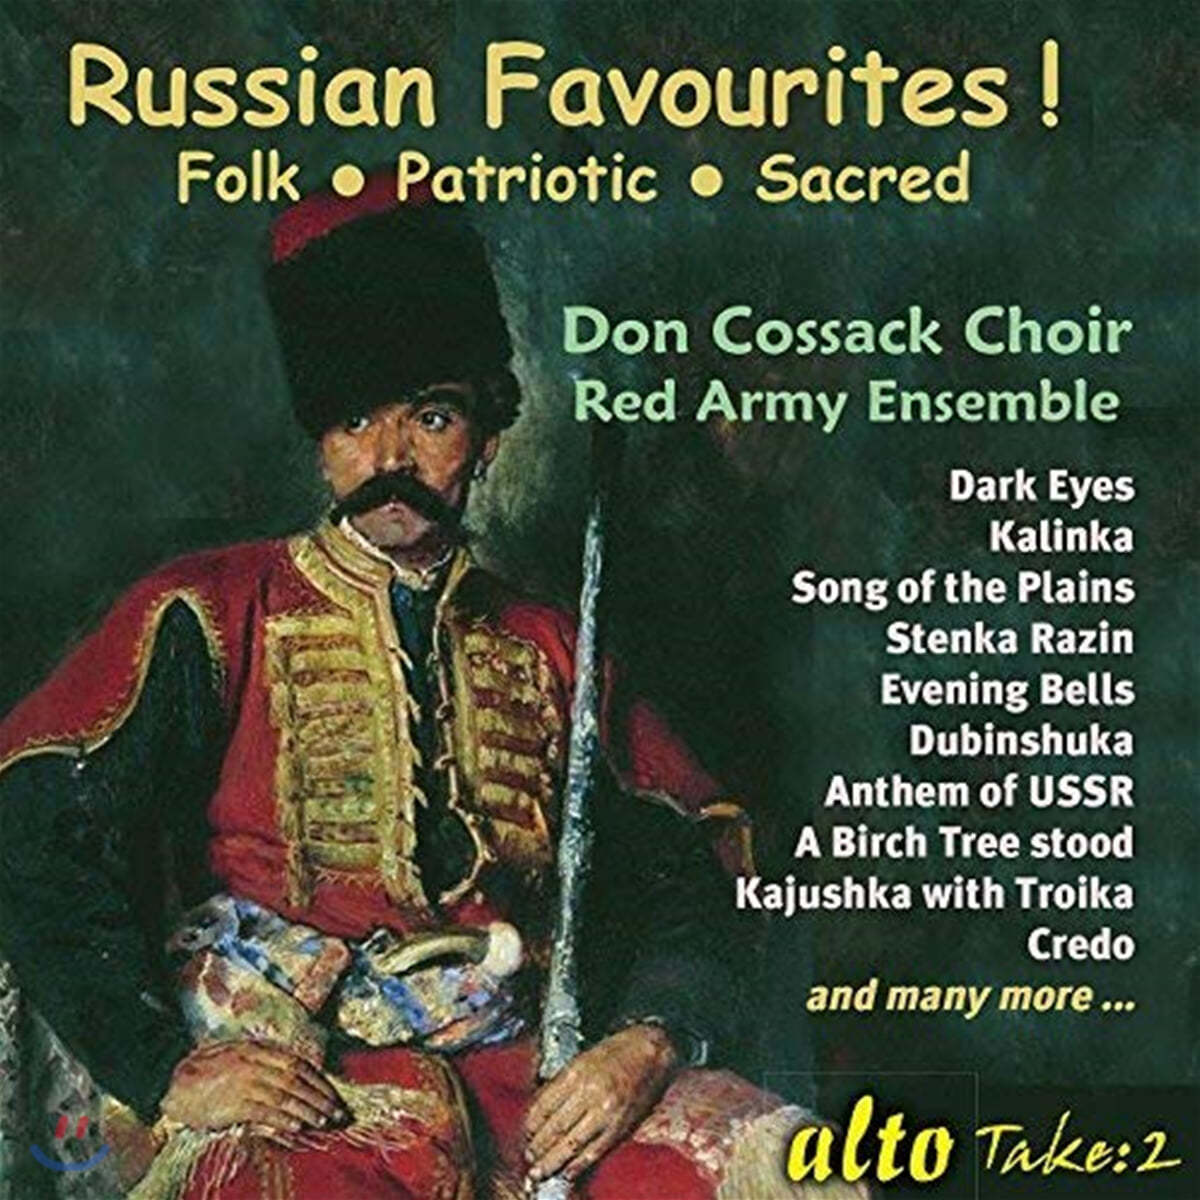 Don Cossack Choir / Red Army Ensemble 인기 러시아곡 모음집 (Russian Favourites!)